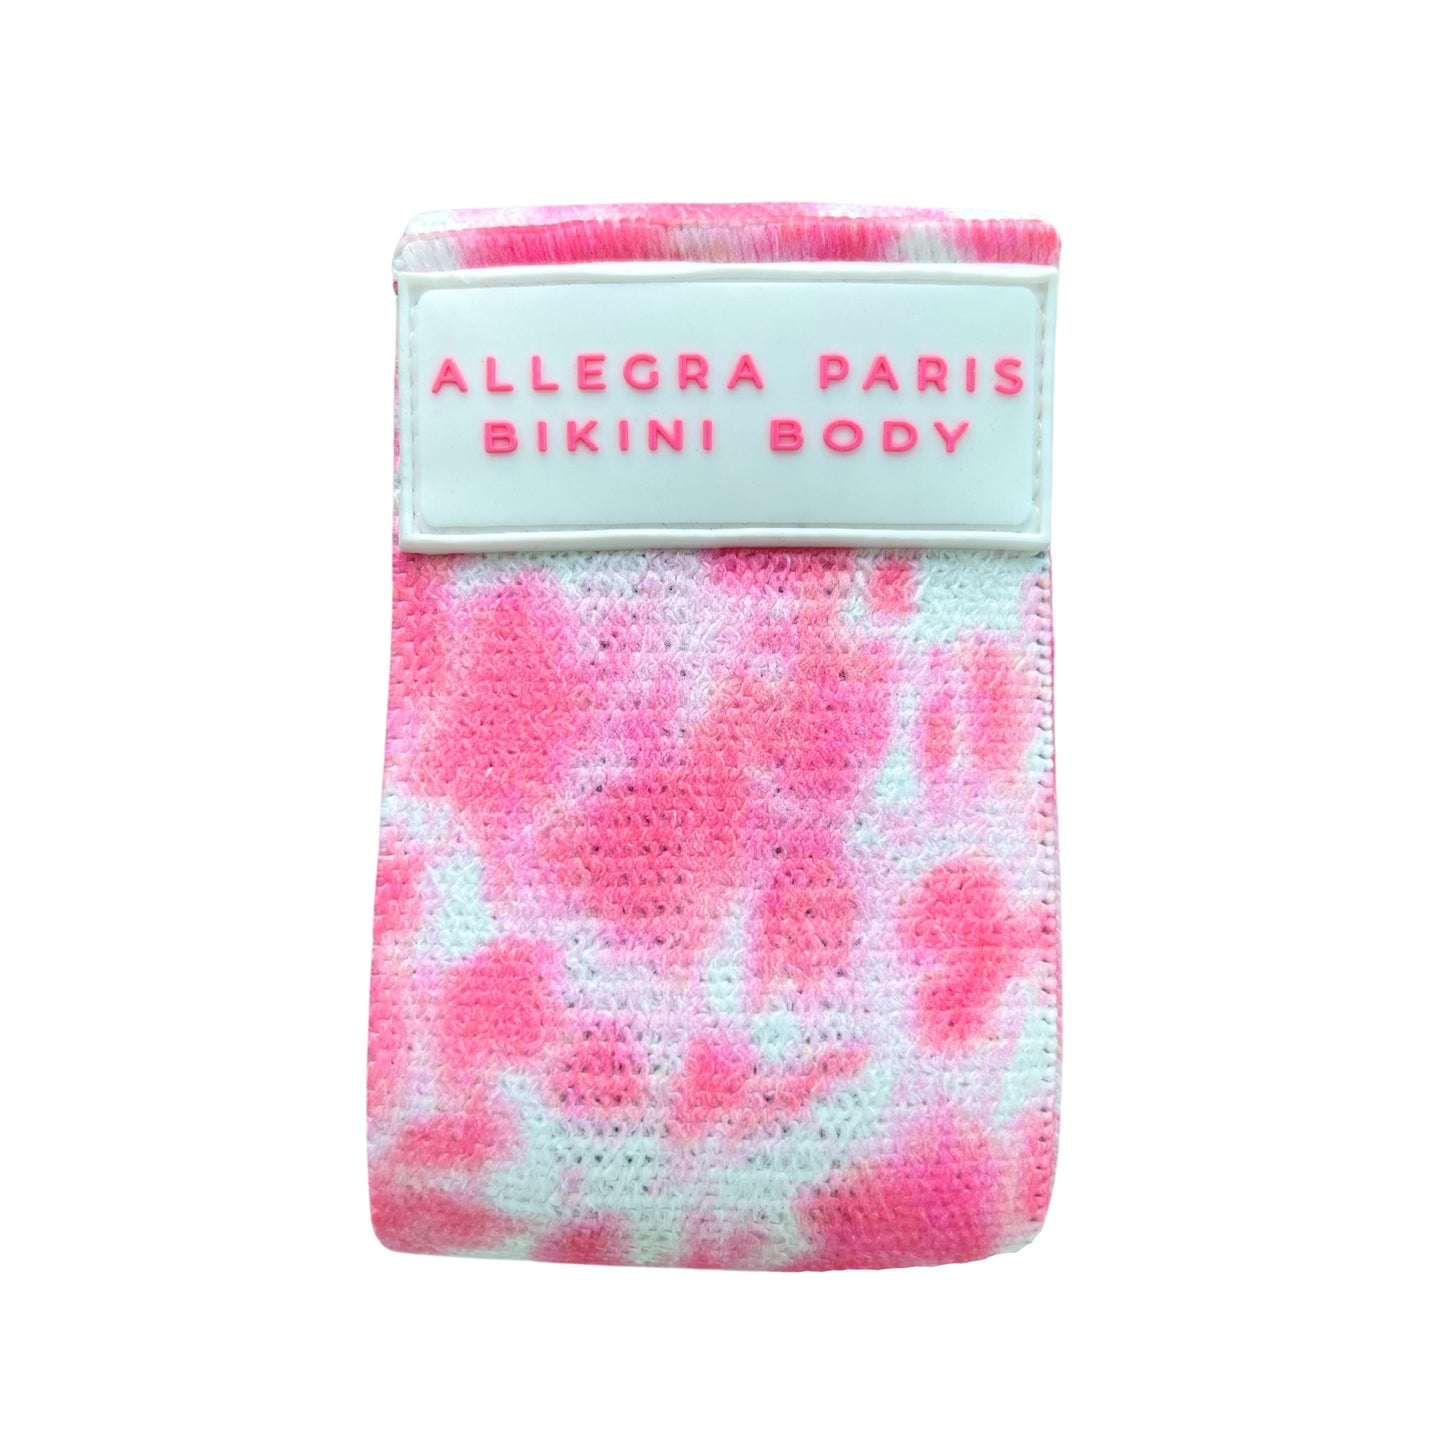 Allegra Paris Bikini Body, Allegra Paris, Allegra Paris Resistance Bands